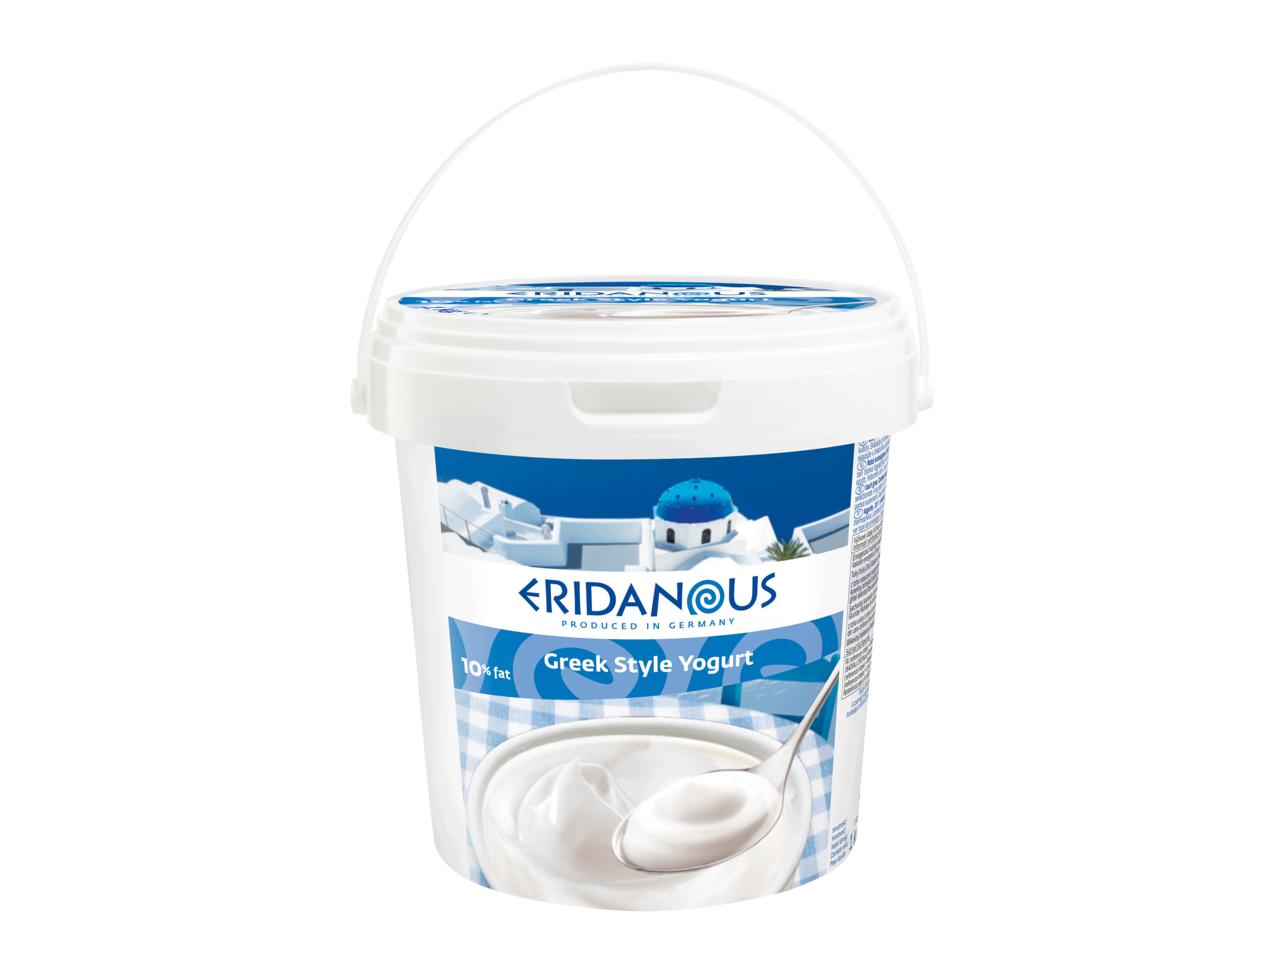 ERIDANOUS Natural Greek Yogurt